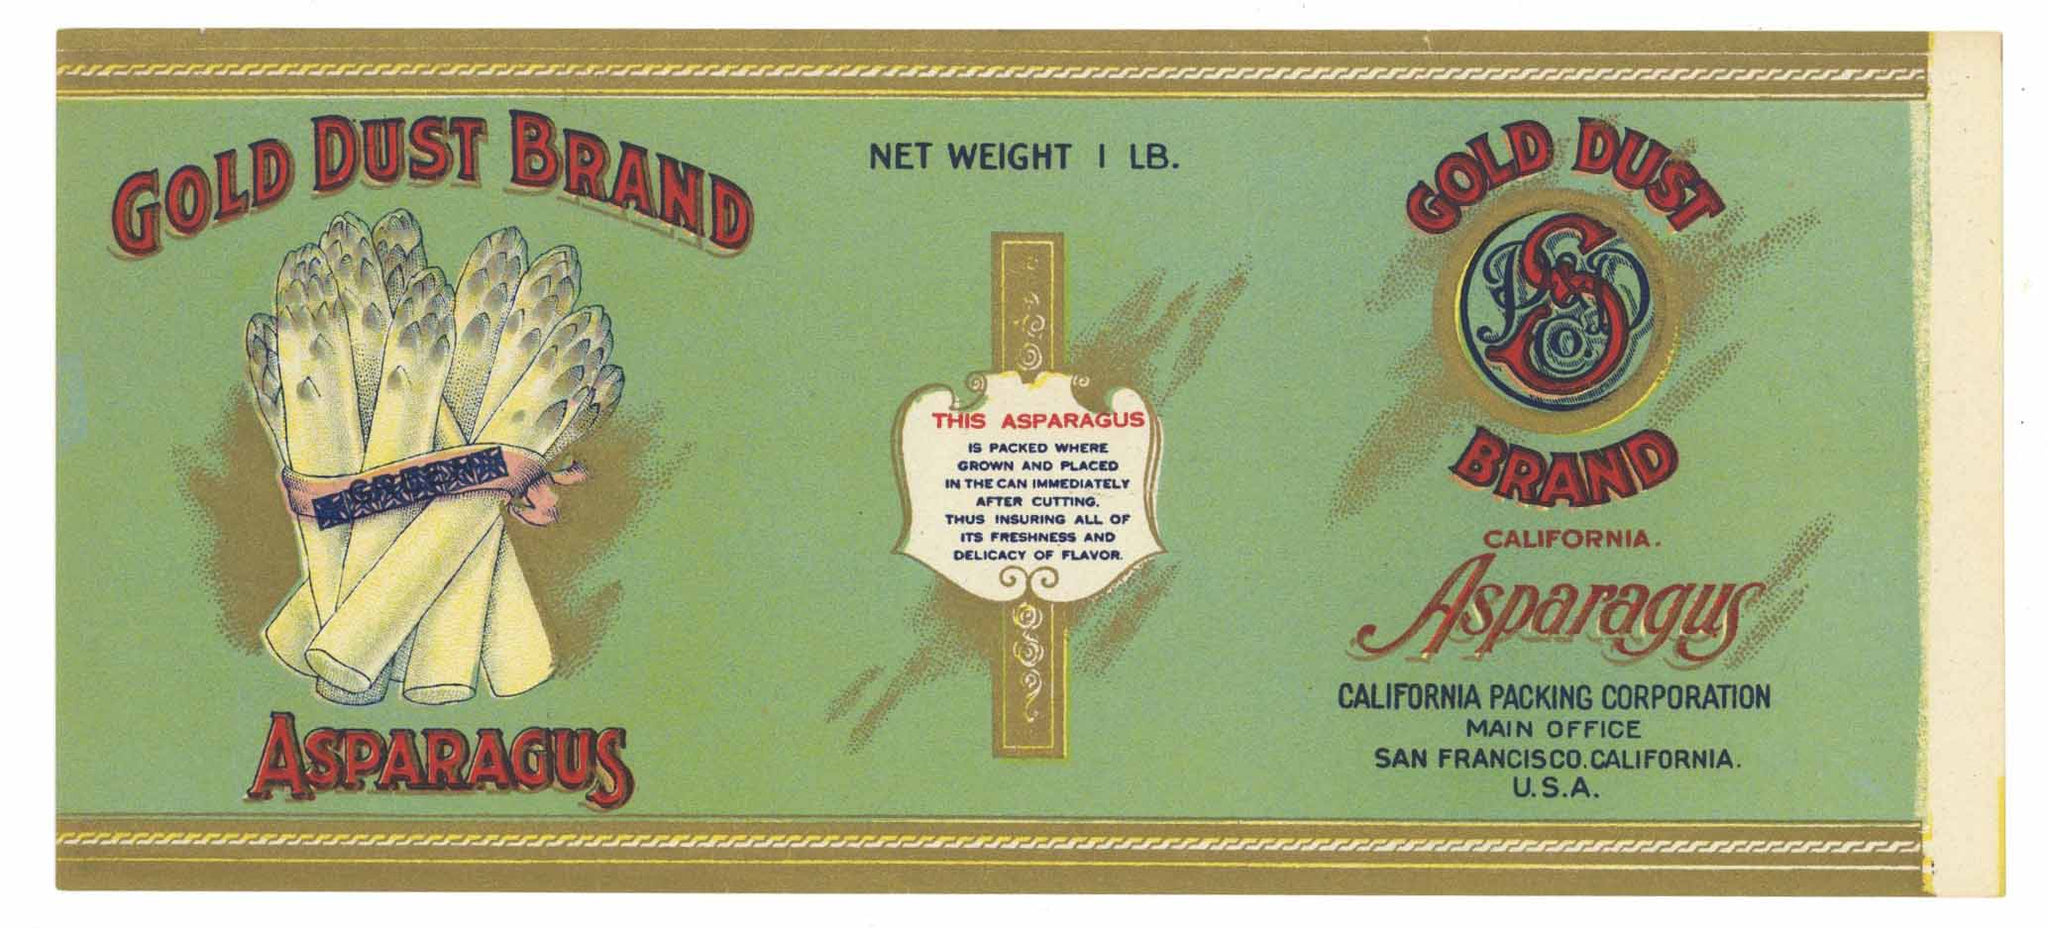 Gold Dust Brand Vintage Asparagus Can Label